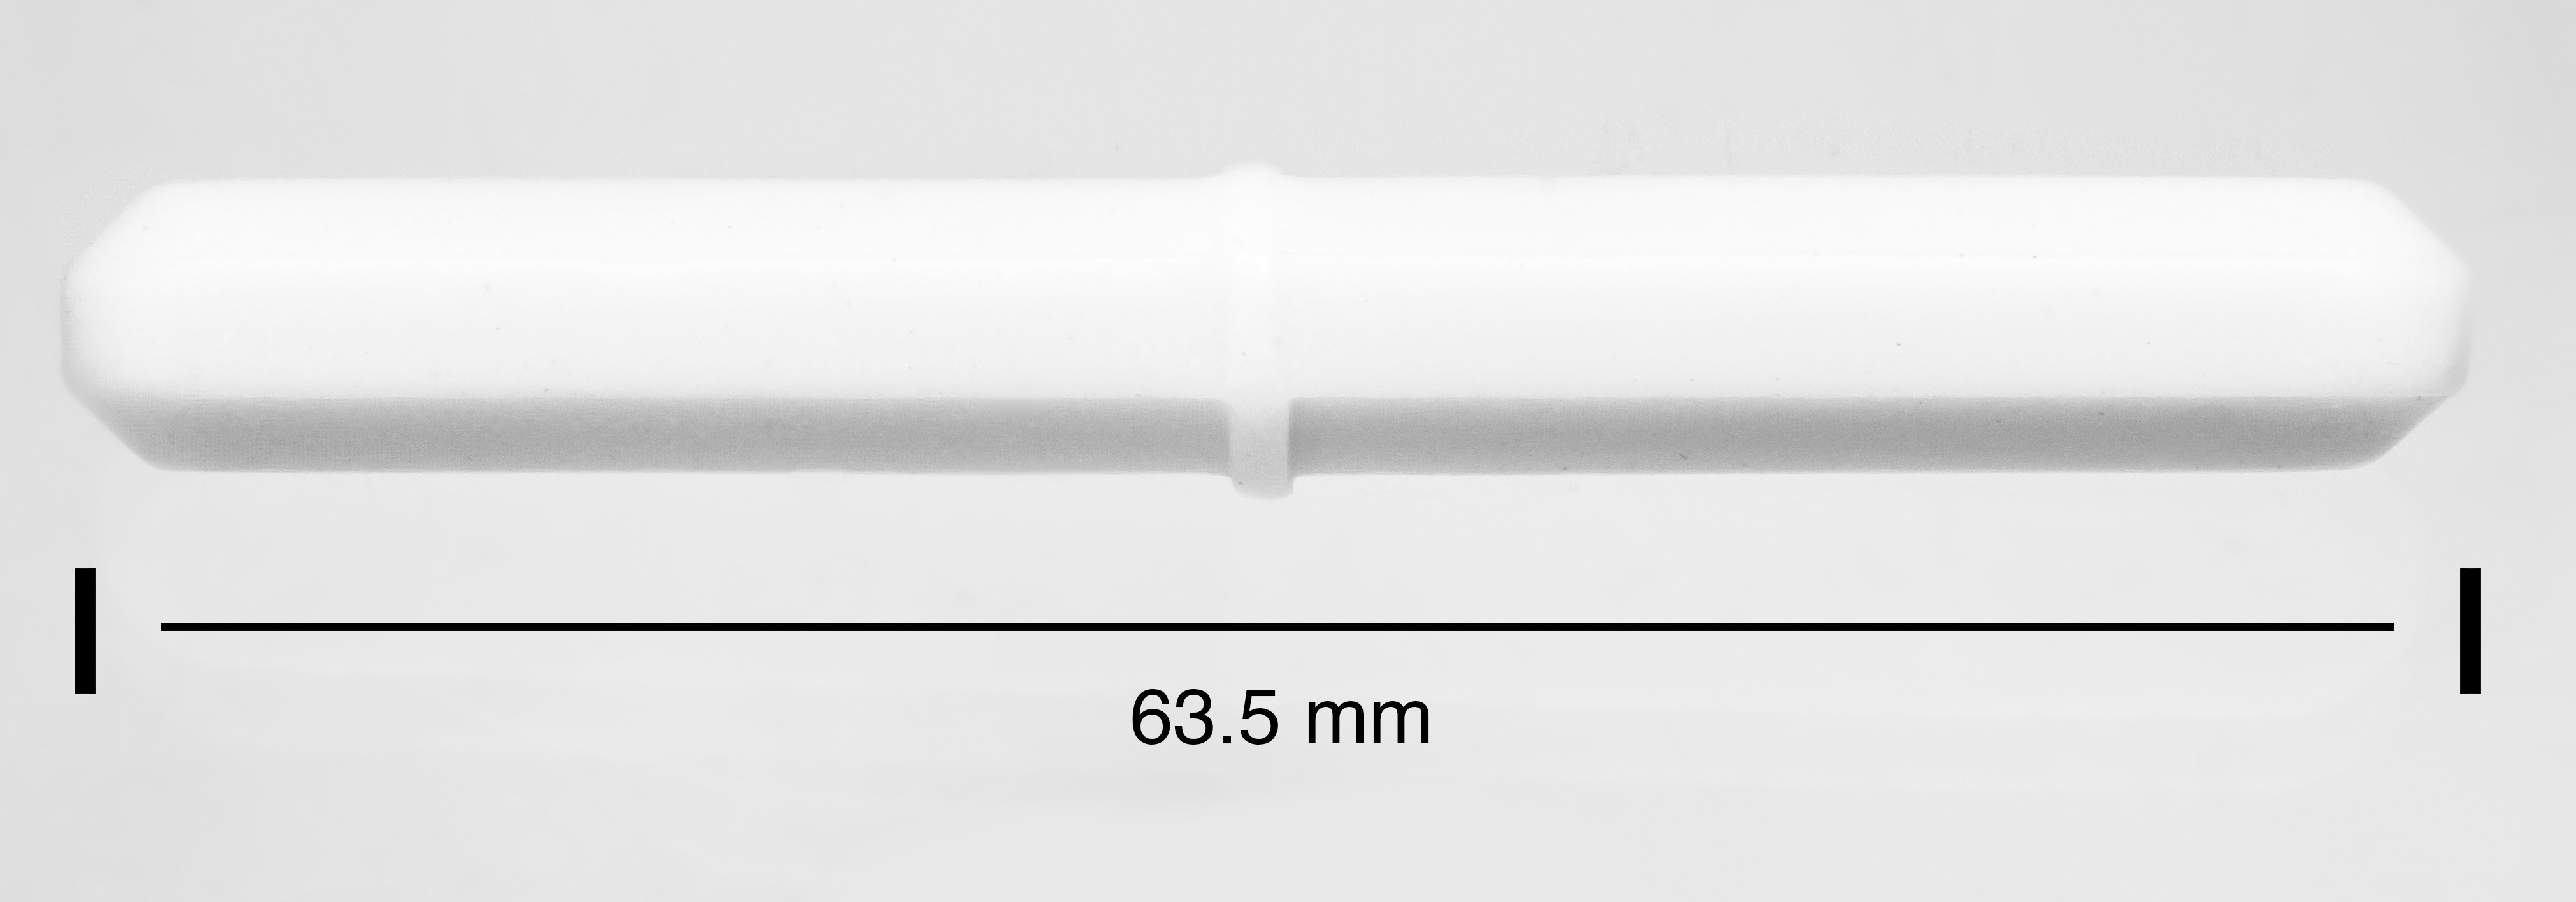 SP Bel-Art Spinbar Teflon Octagon Magnetic Stirring Bar; 63.5 x 8mm, White